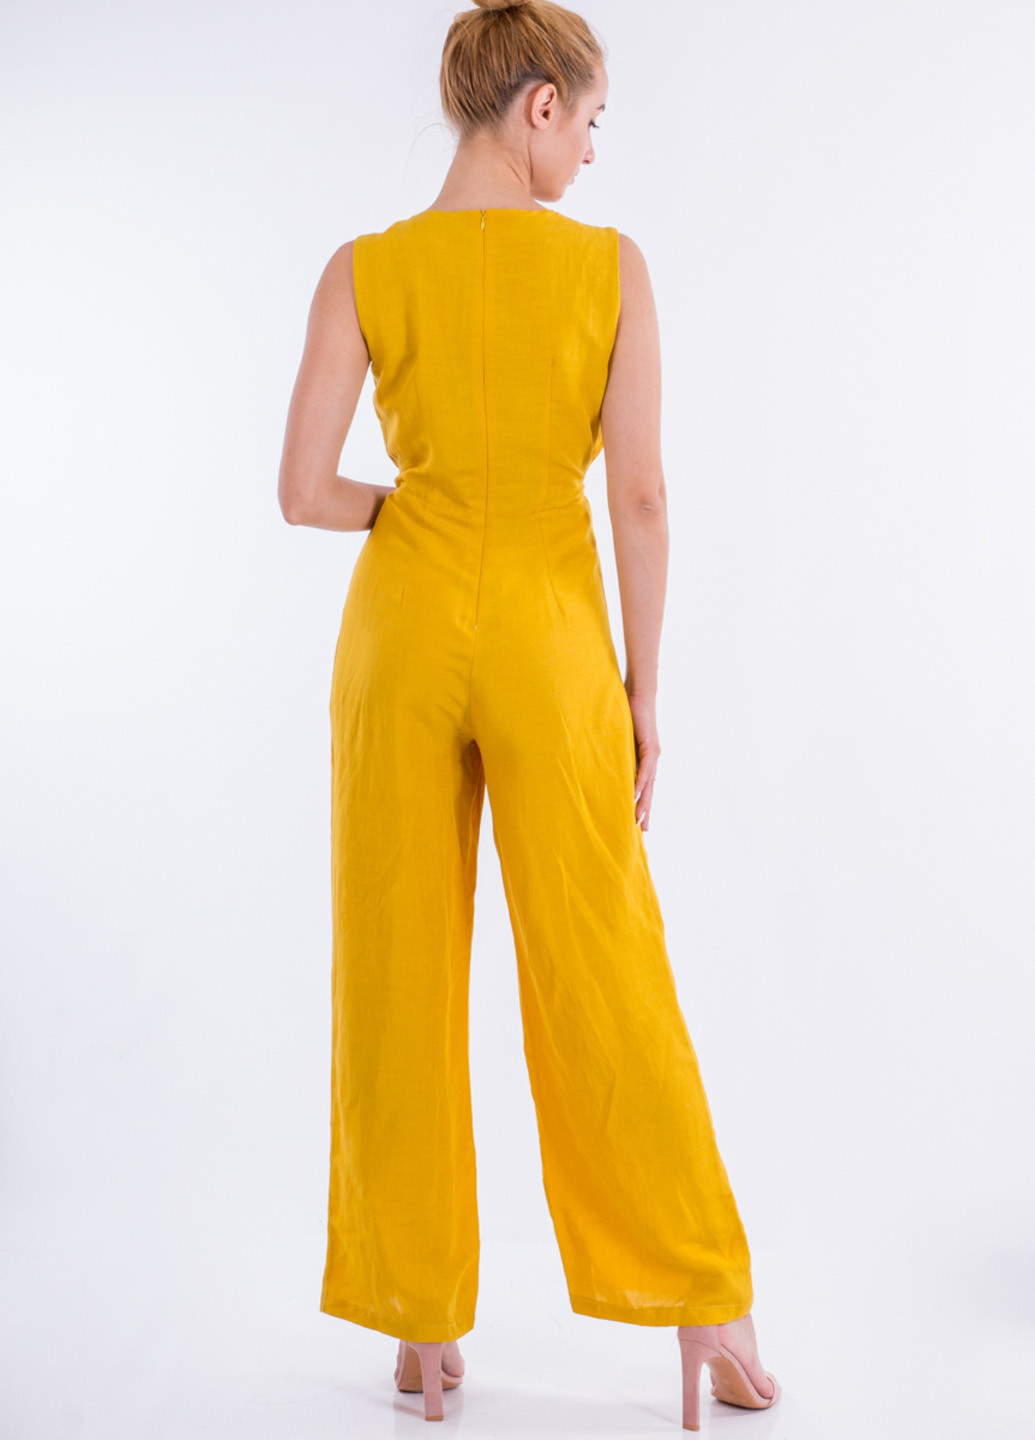 Комбинезон Sarah Chole комбинезон-брюки цветочный жёлтый кэжуал полиэстер, лен